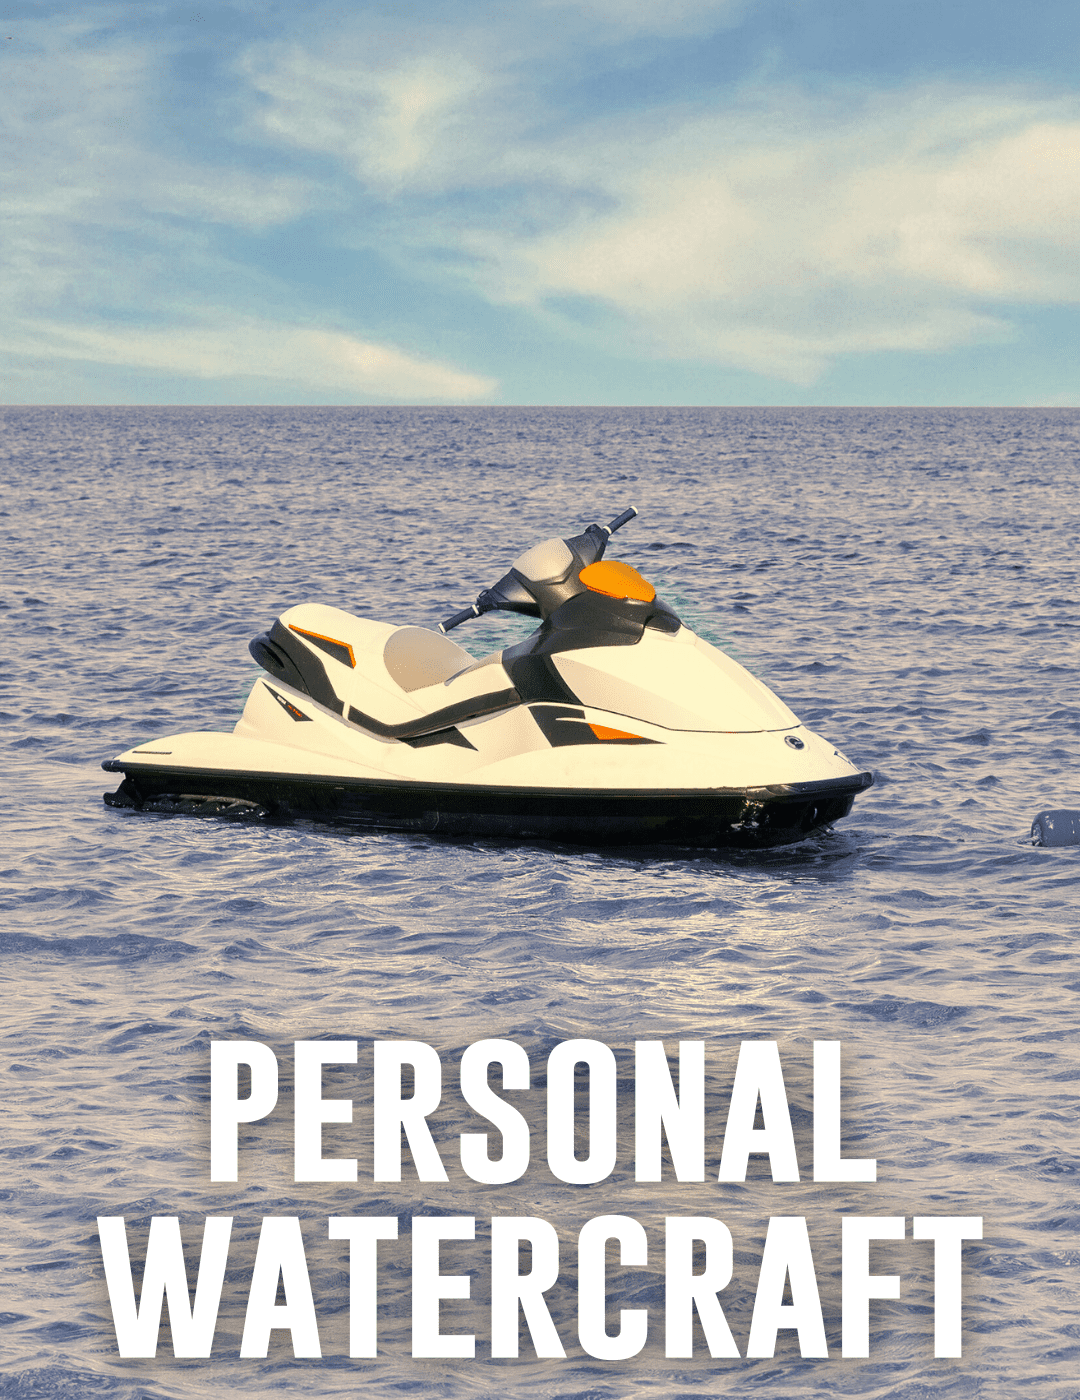 finance your personal watercraft through Ironhorse Funding. Jetski, jet ski, watercraft